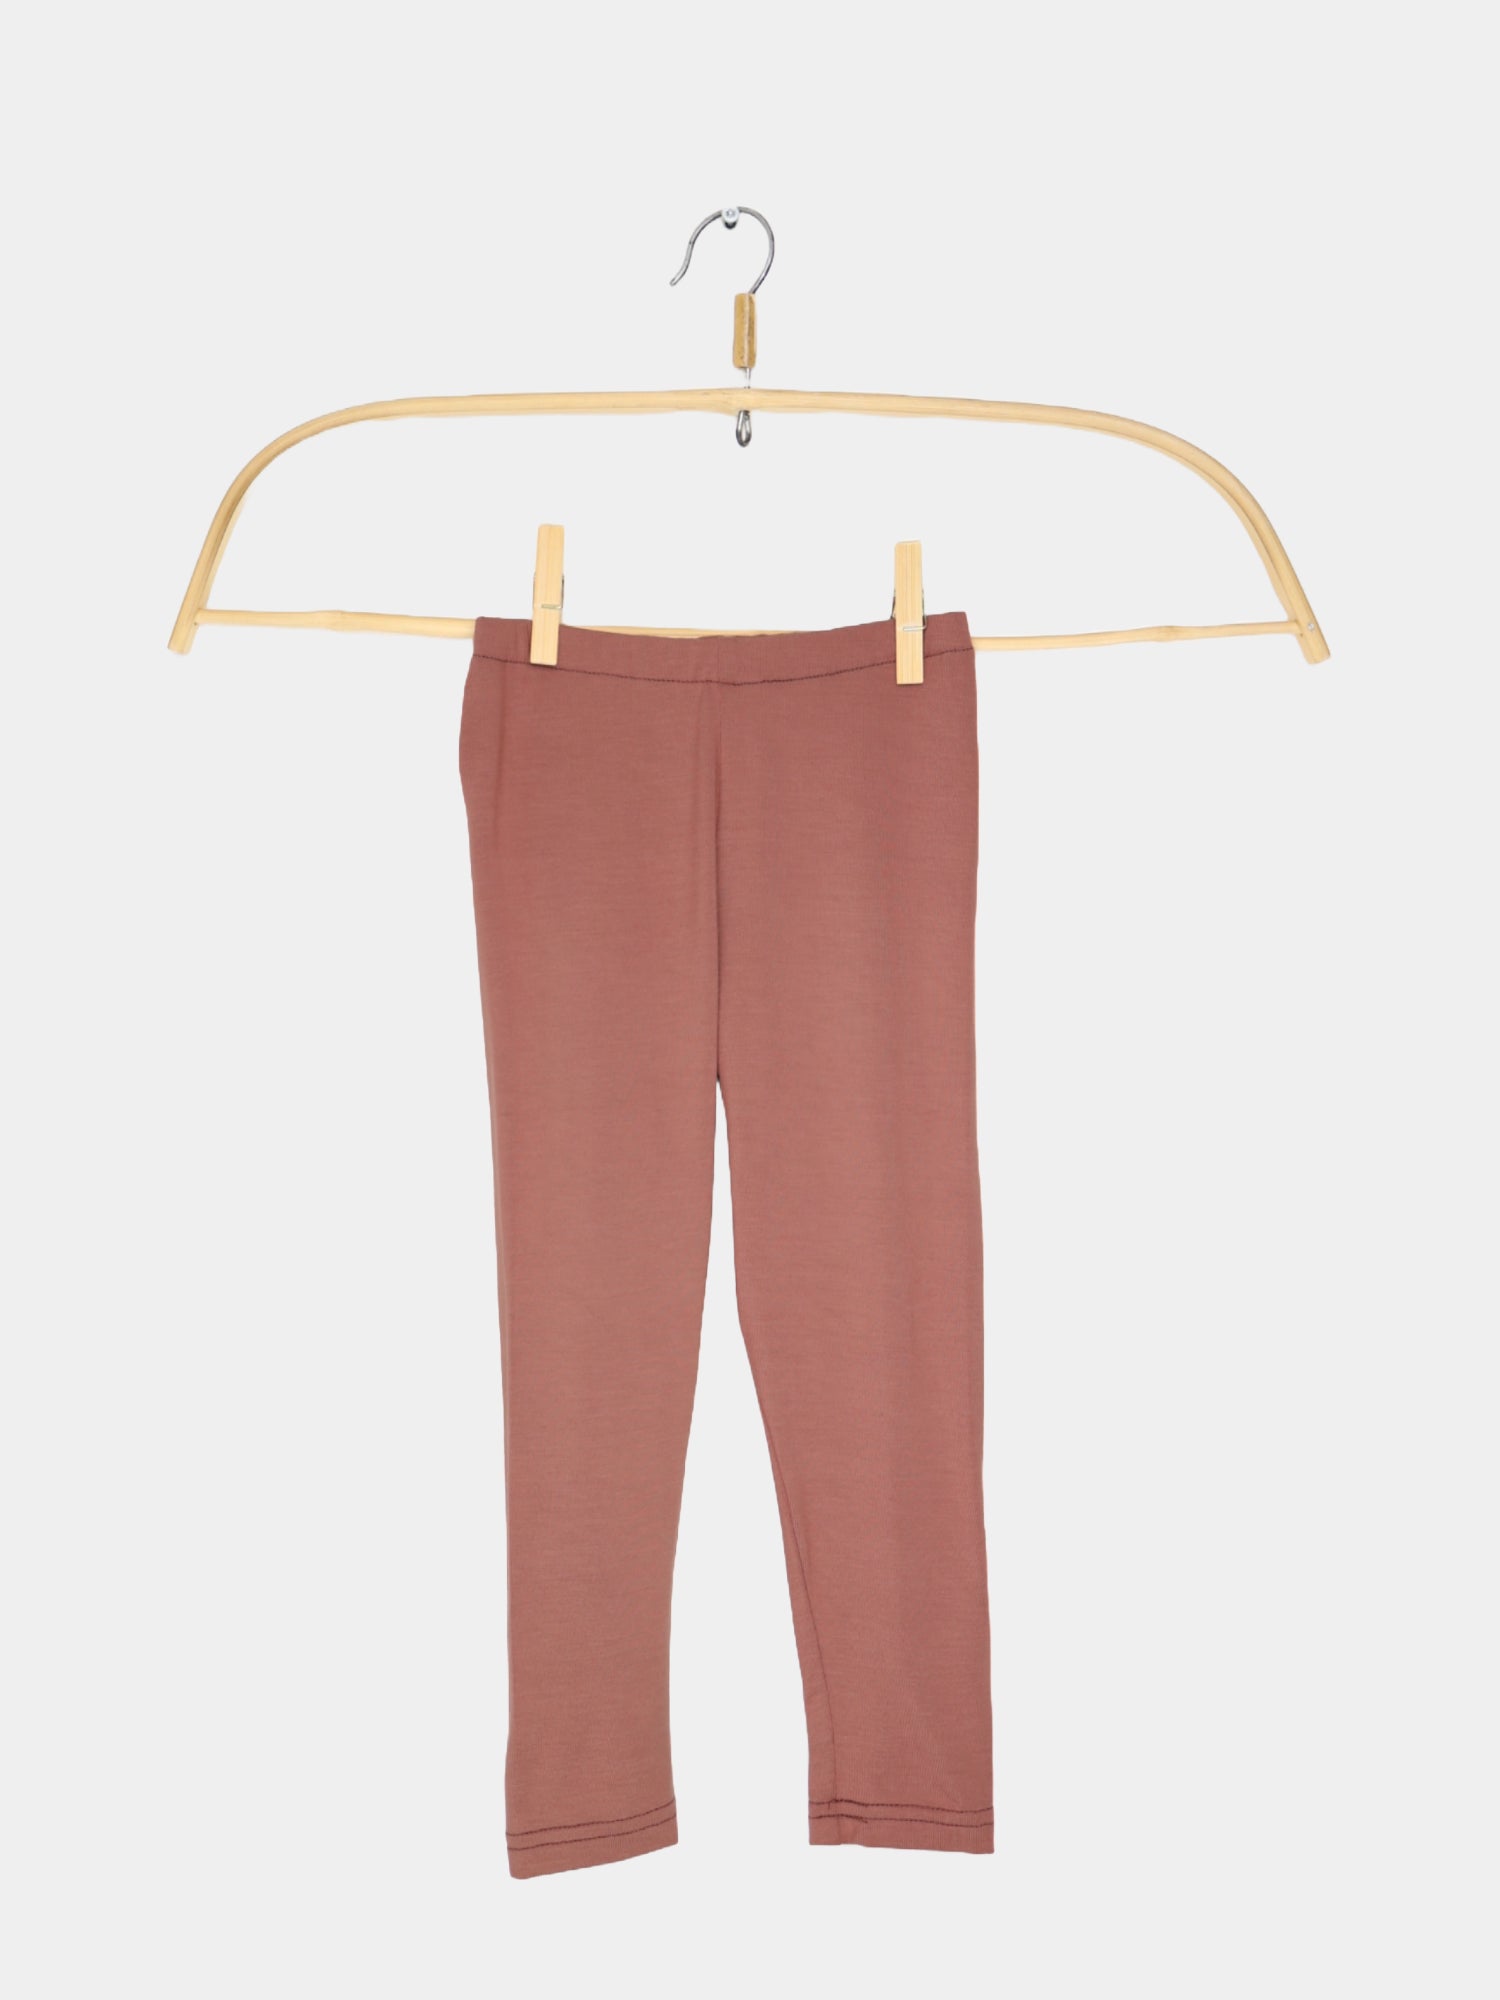 Cashmere-blend leggings to match the wrap shirt - cinnamon